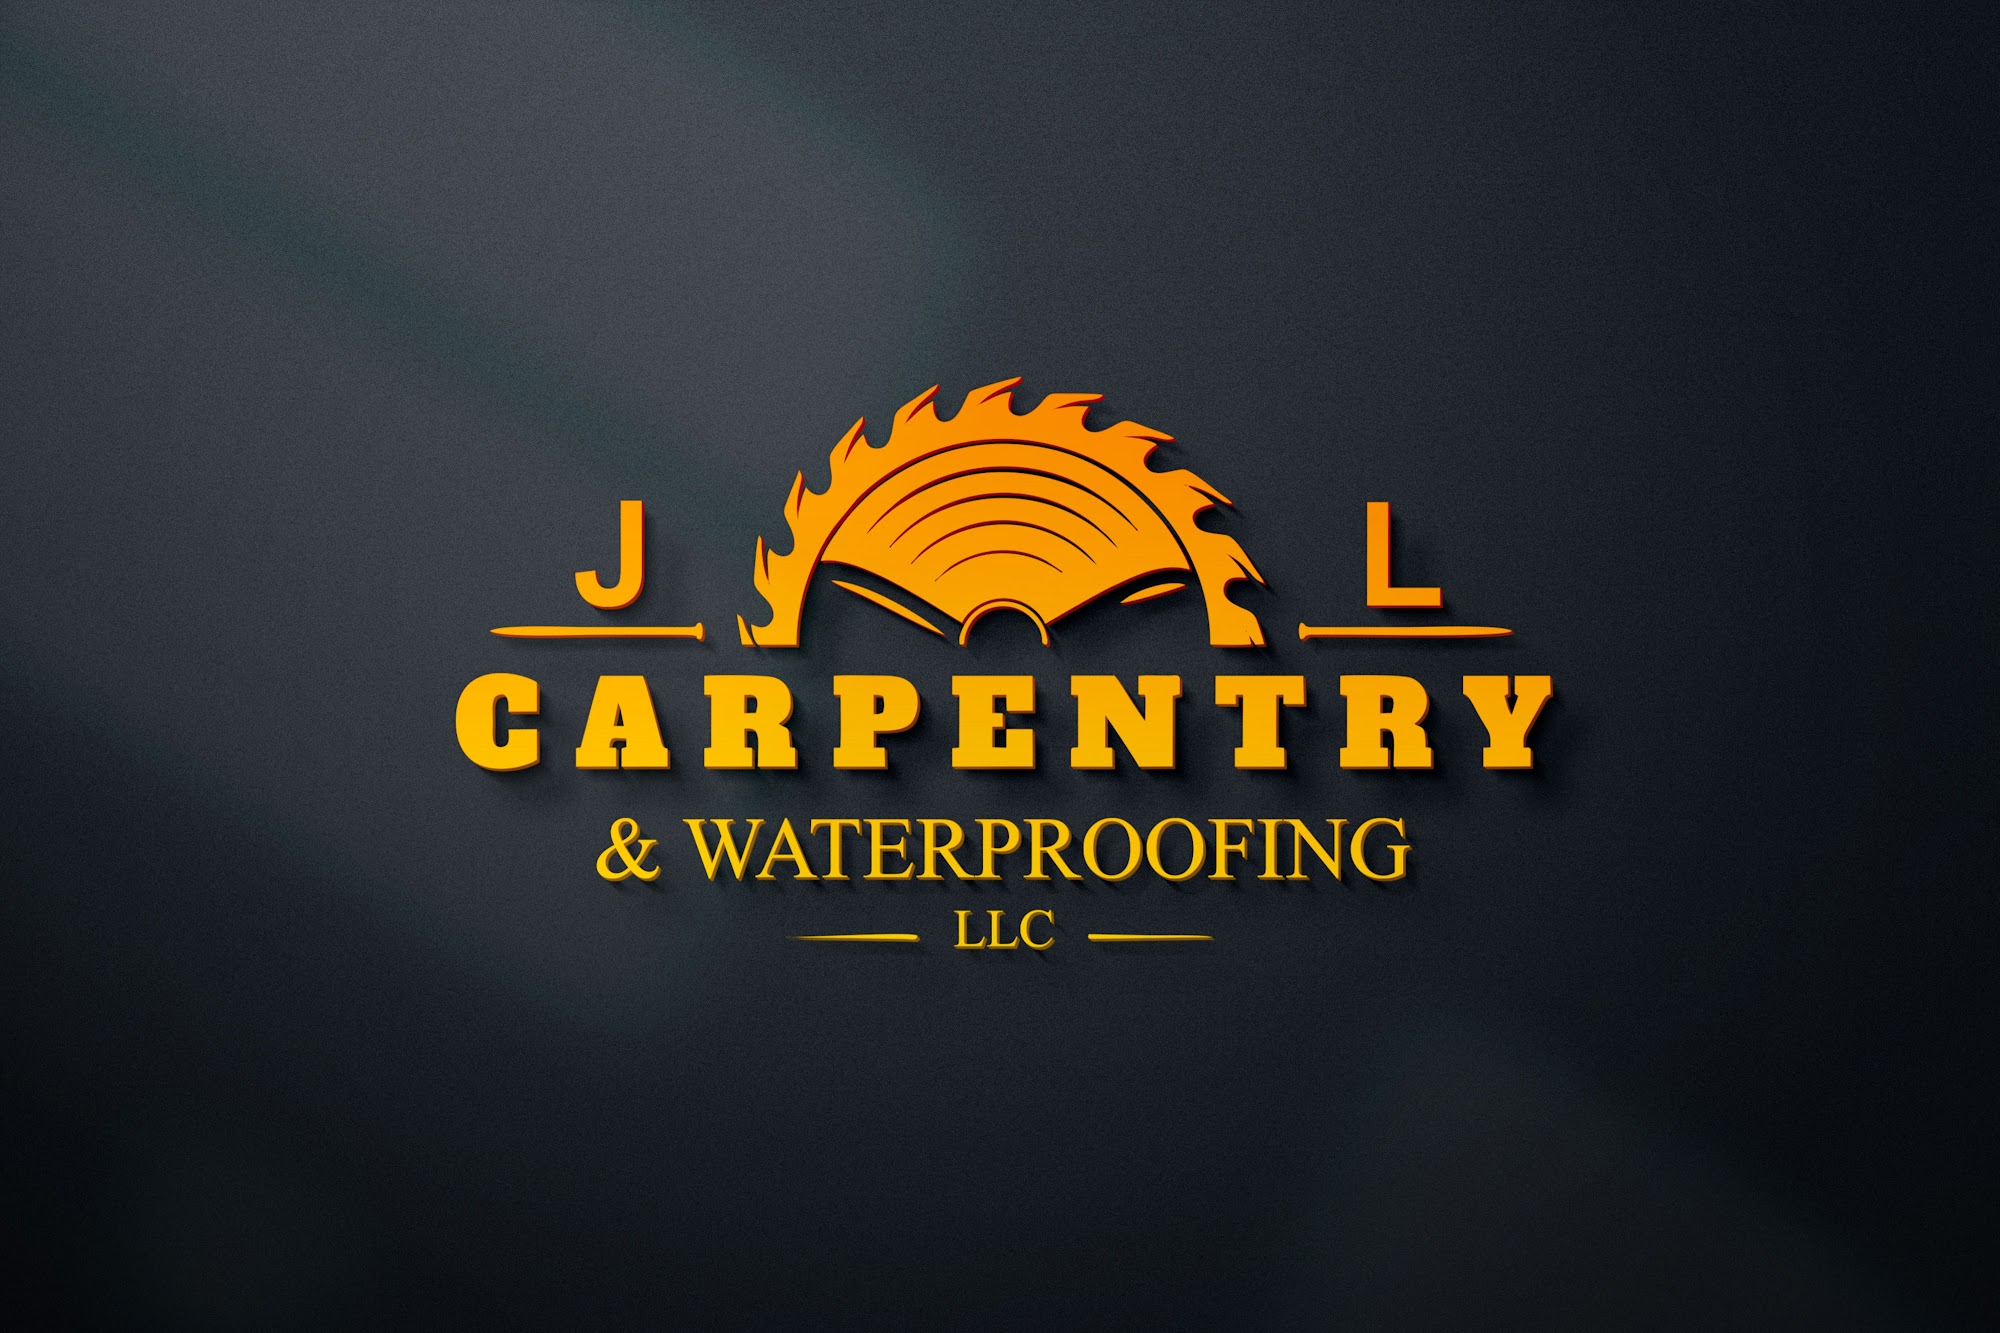 JL Carpentry & Waterproofing LLC 318 11th Ave, New Glarus Wisconsin 53574